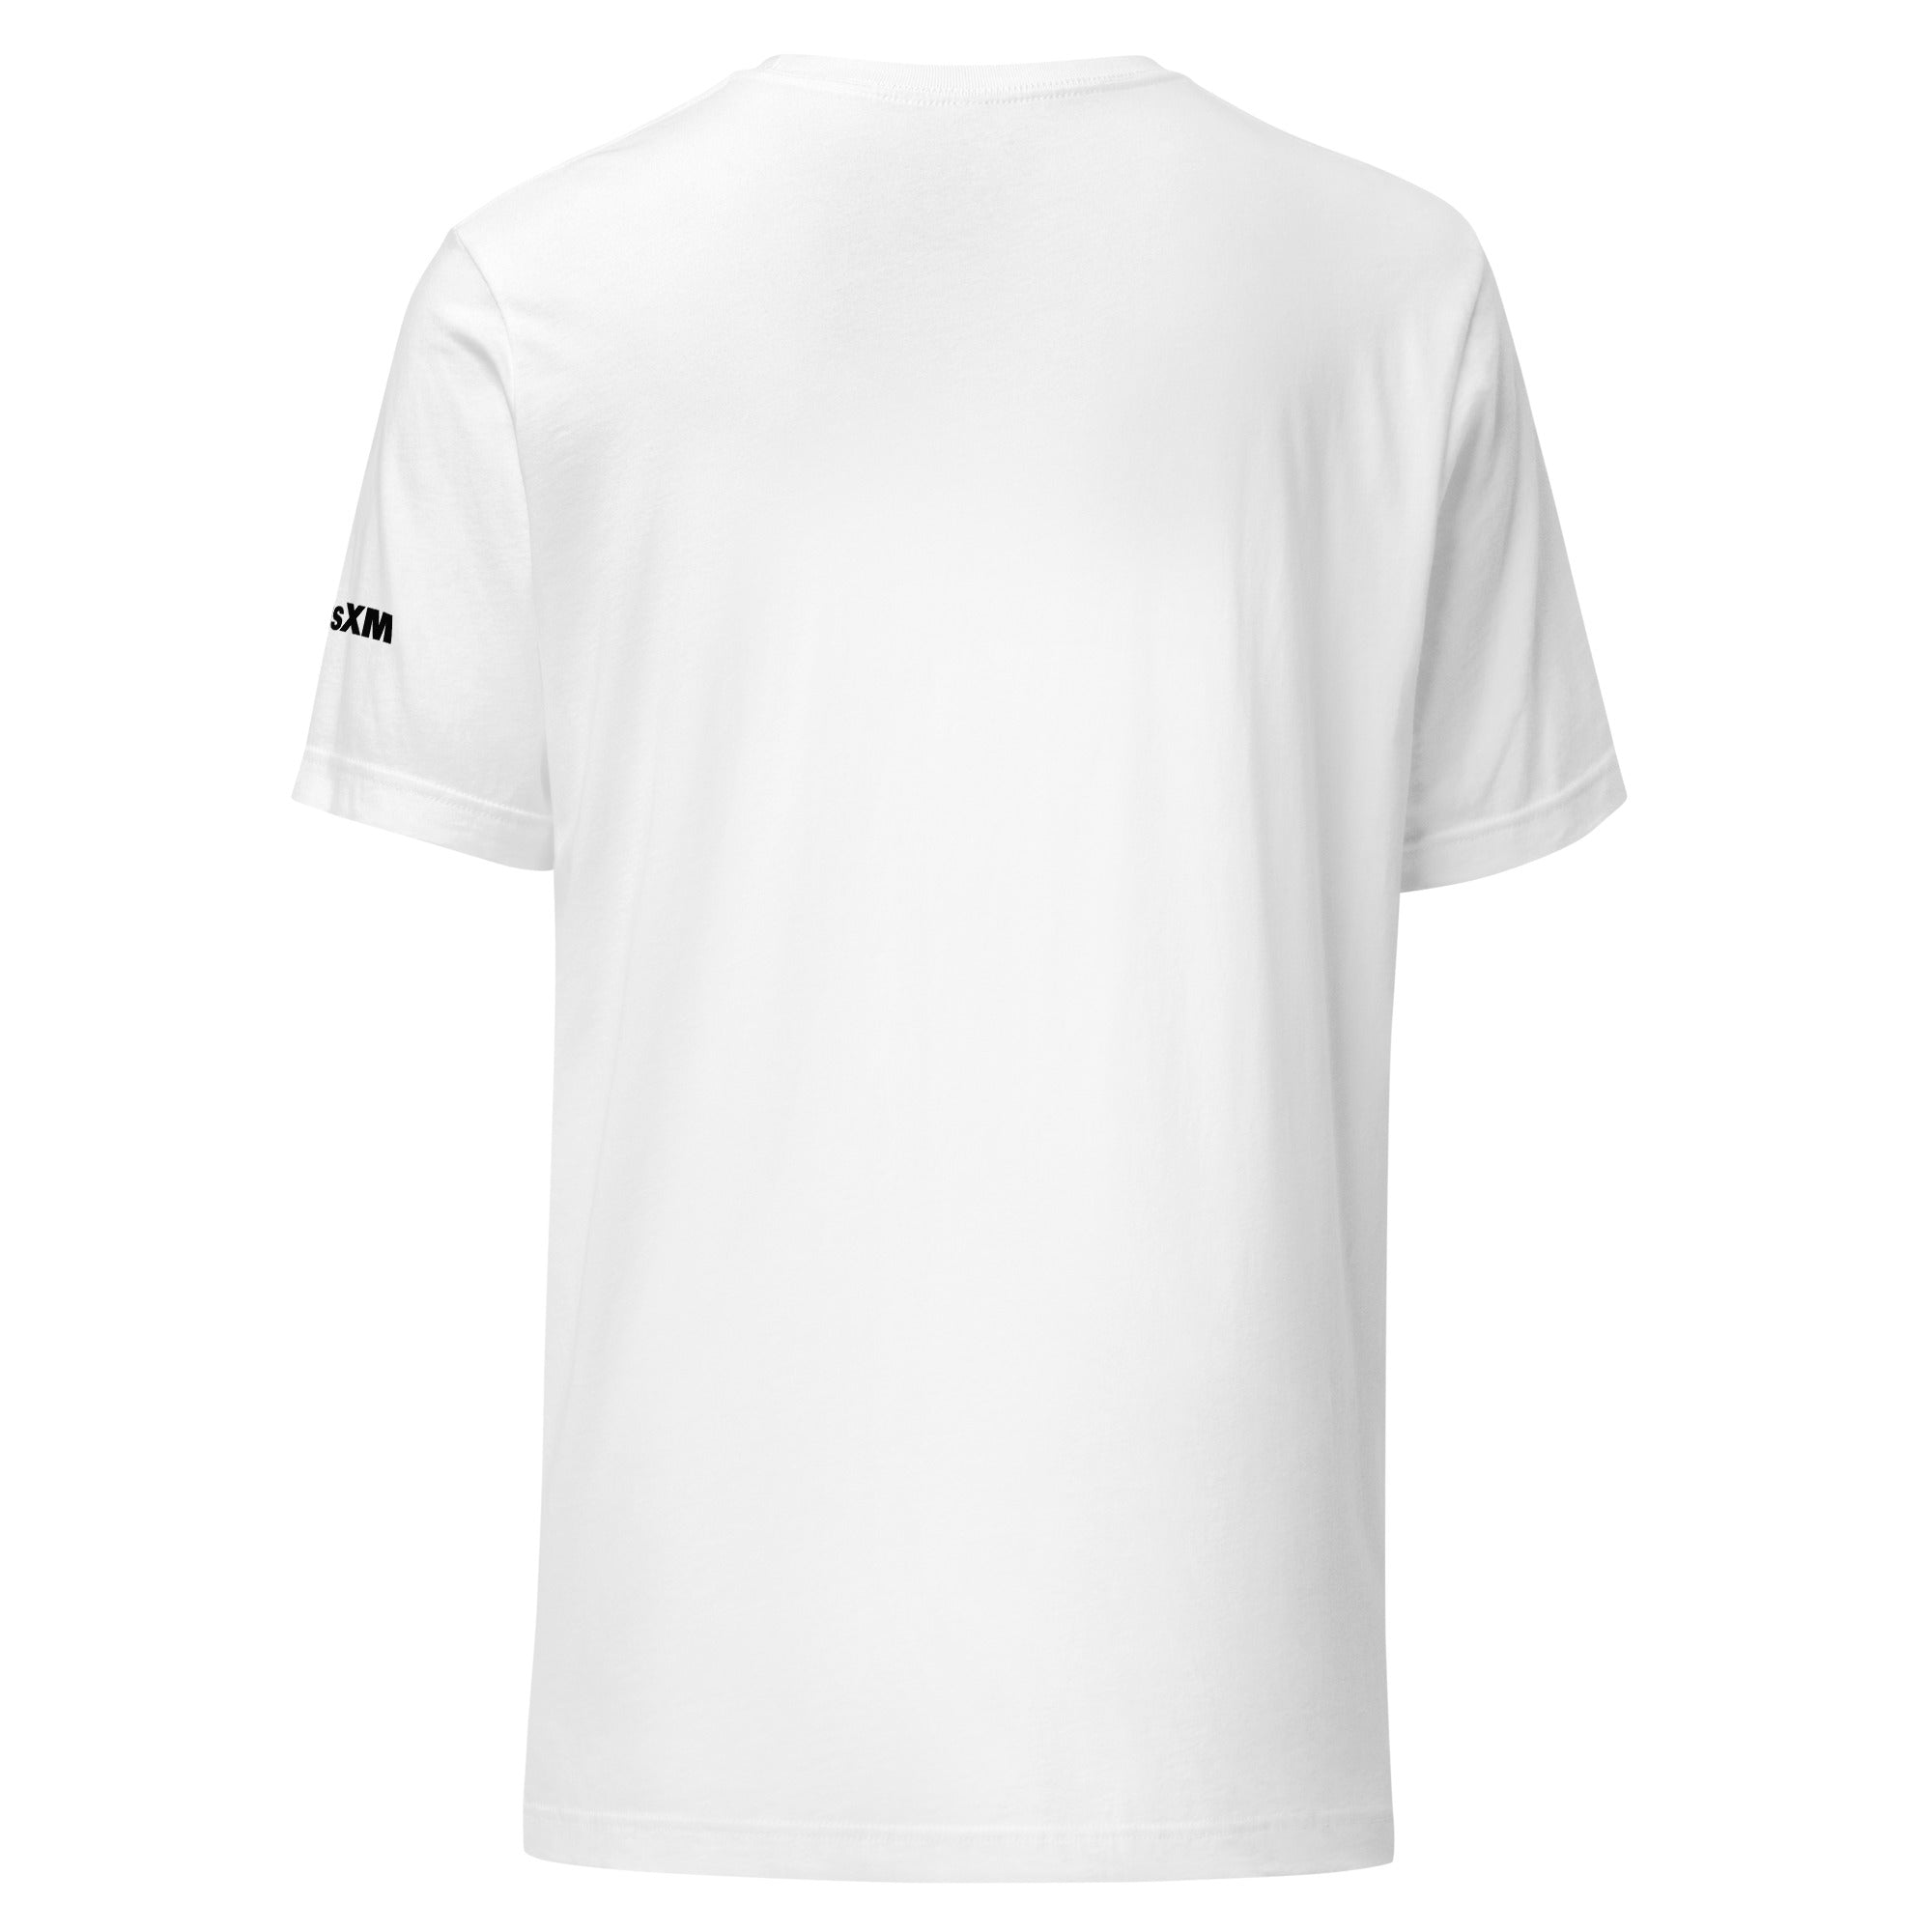 Fight Nation: T-shirt (White)